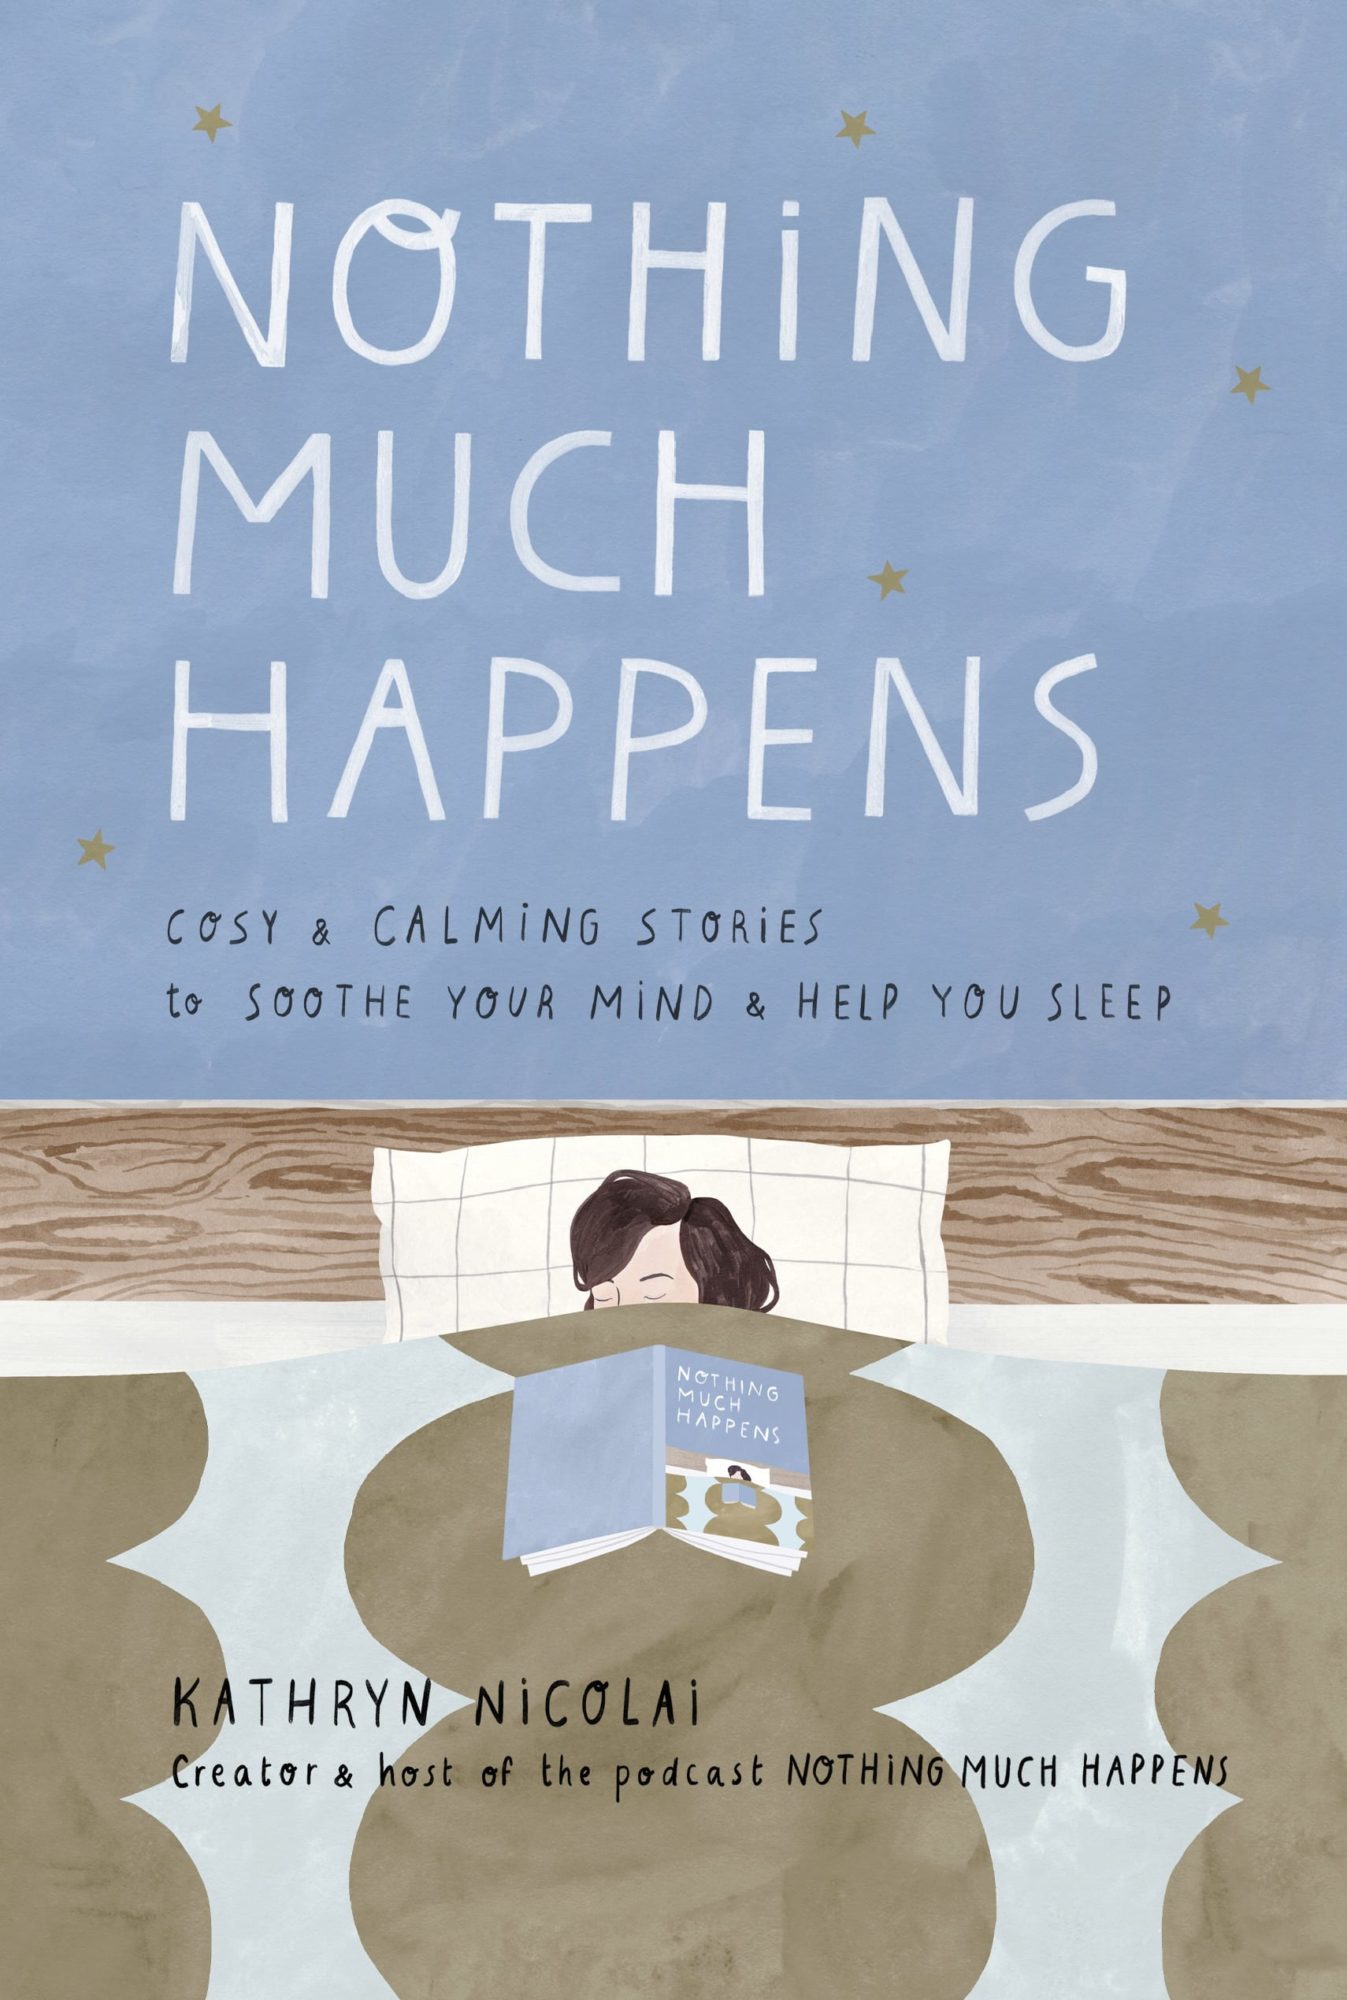 Nothing Much Happens by Kathryn Nicolai (Allen & Unwin)